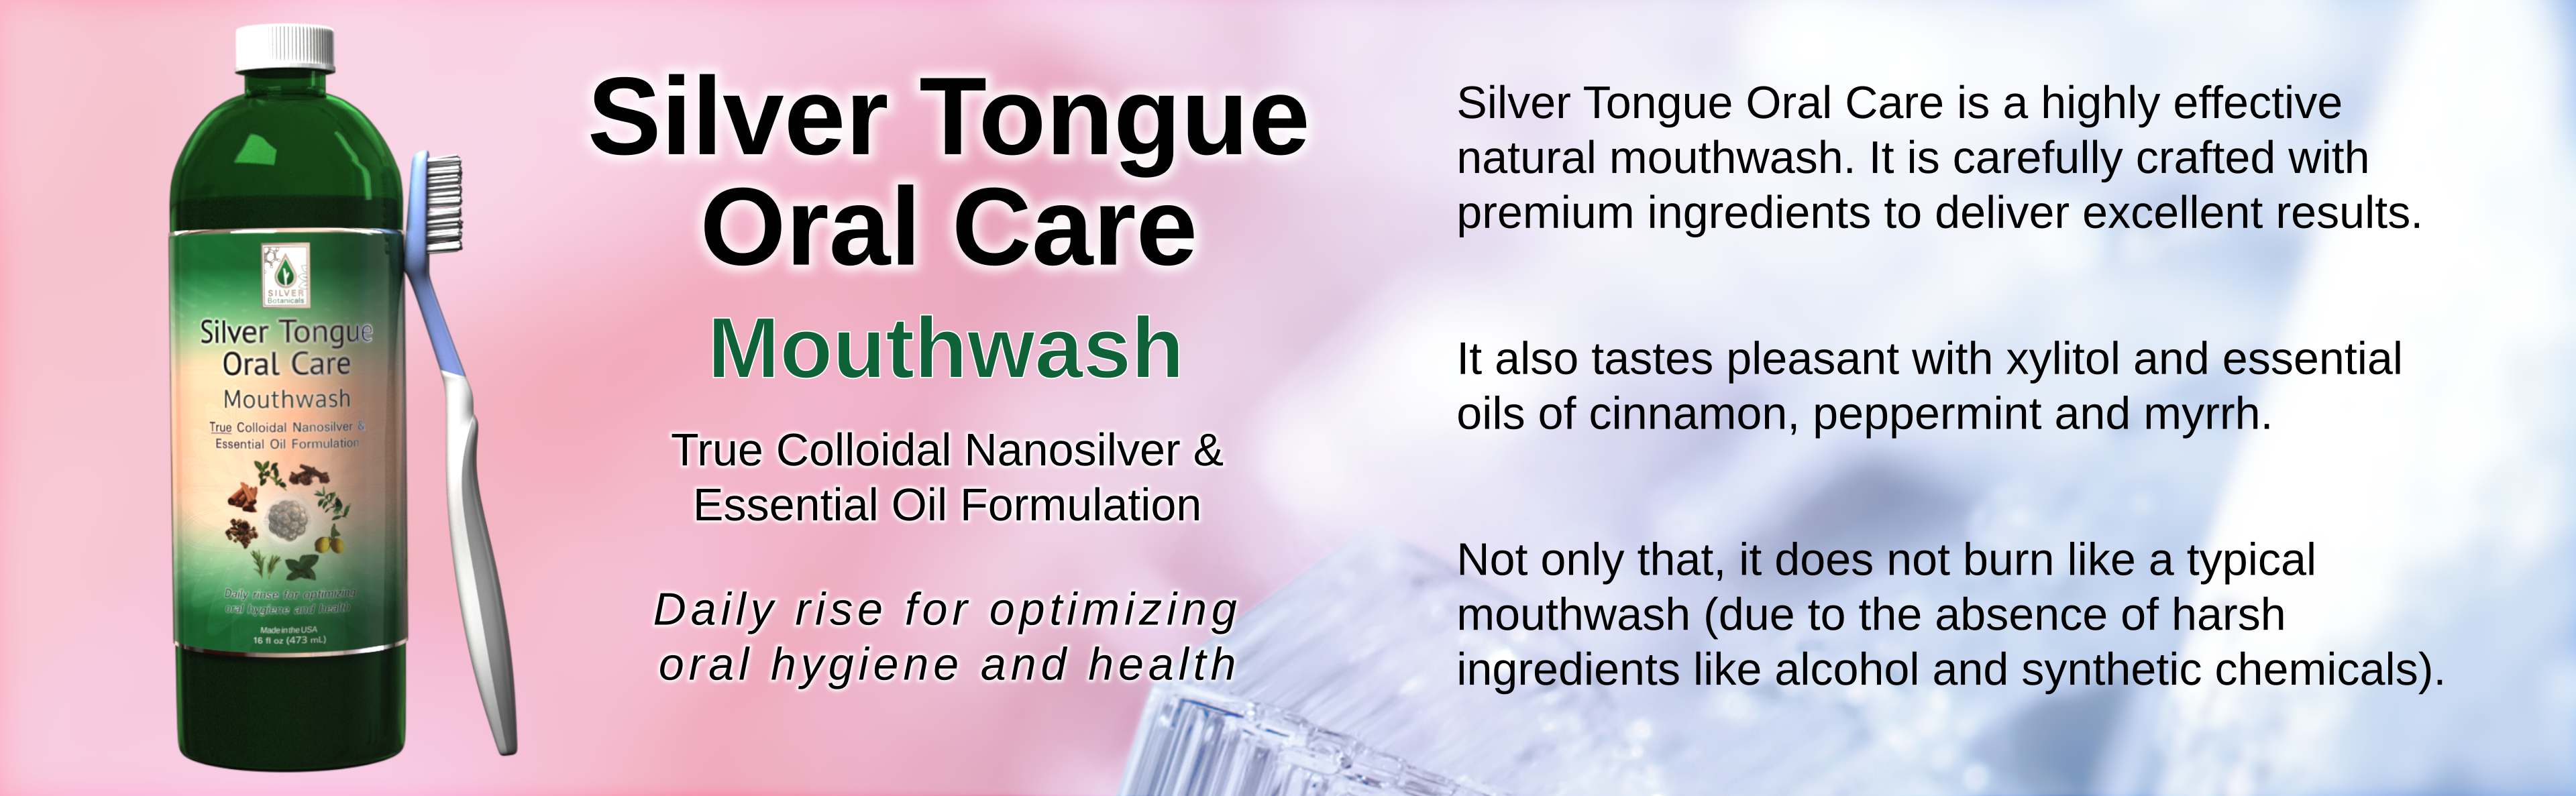 Silver Tongue Oral Care Mouthwash